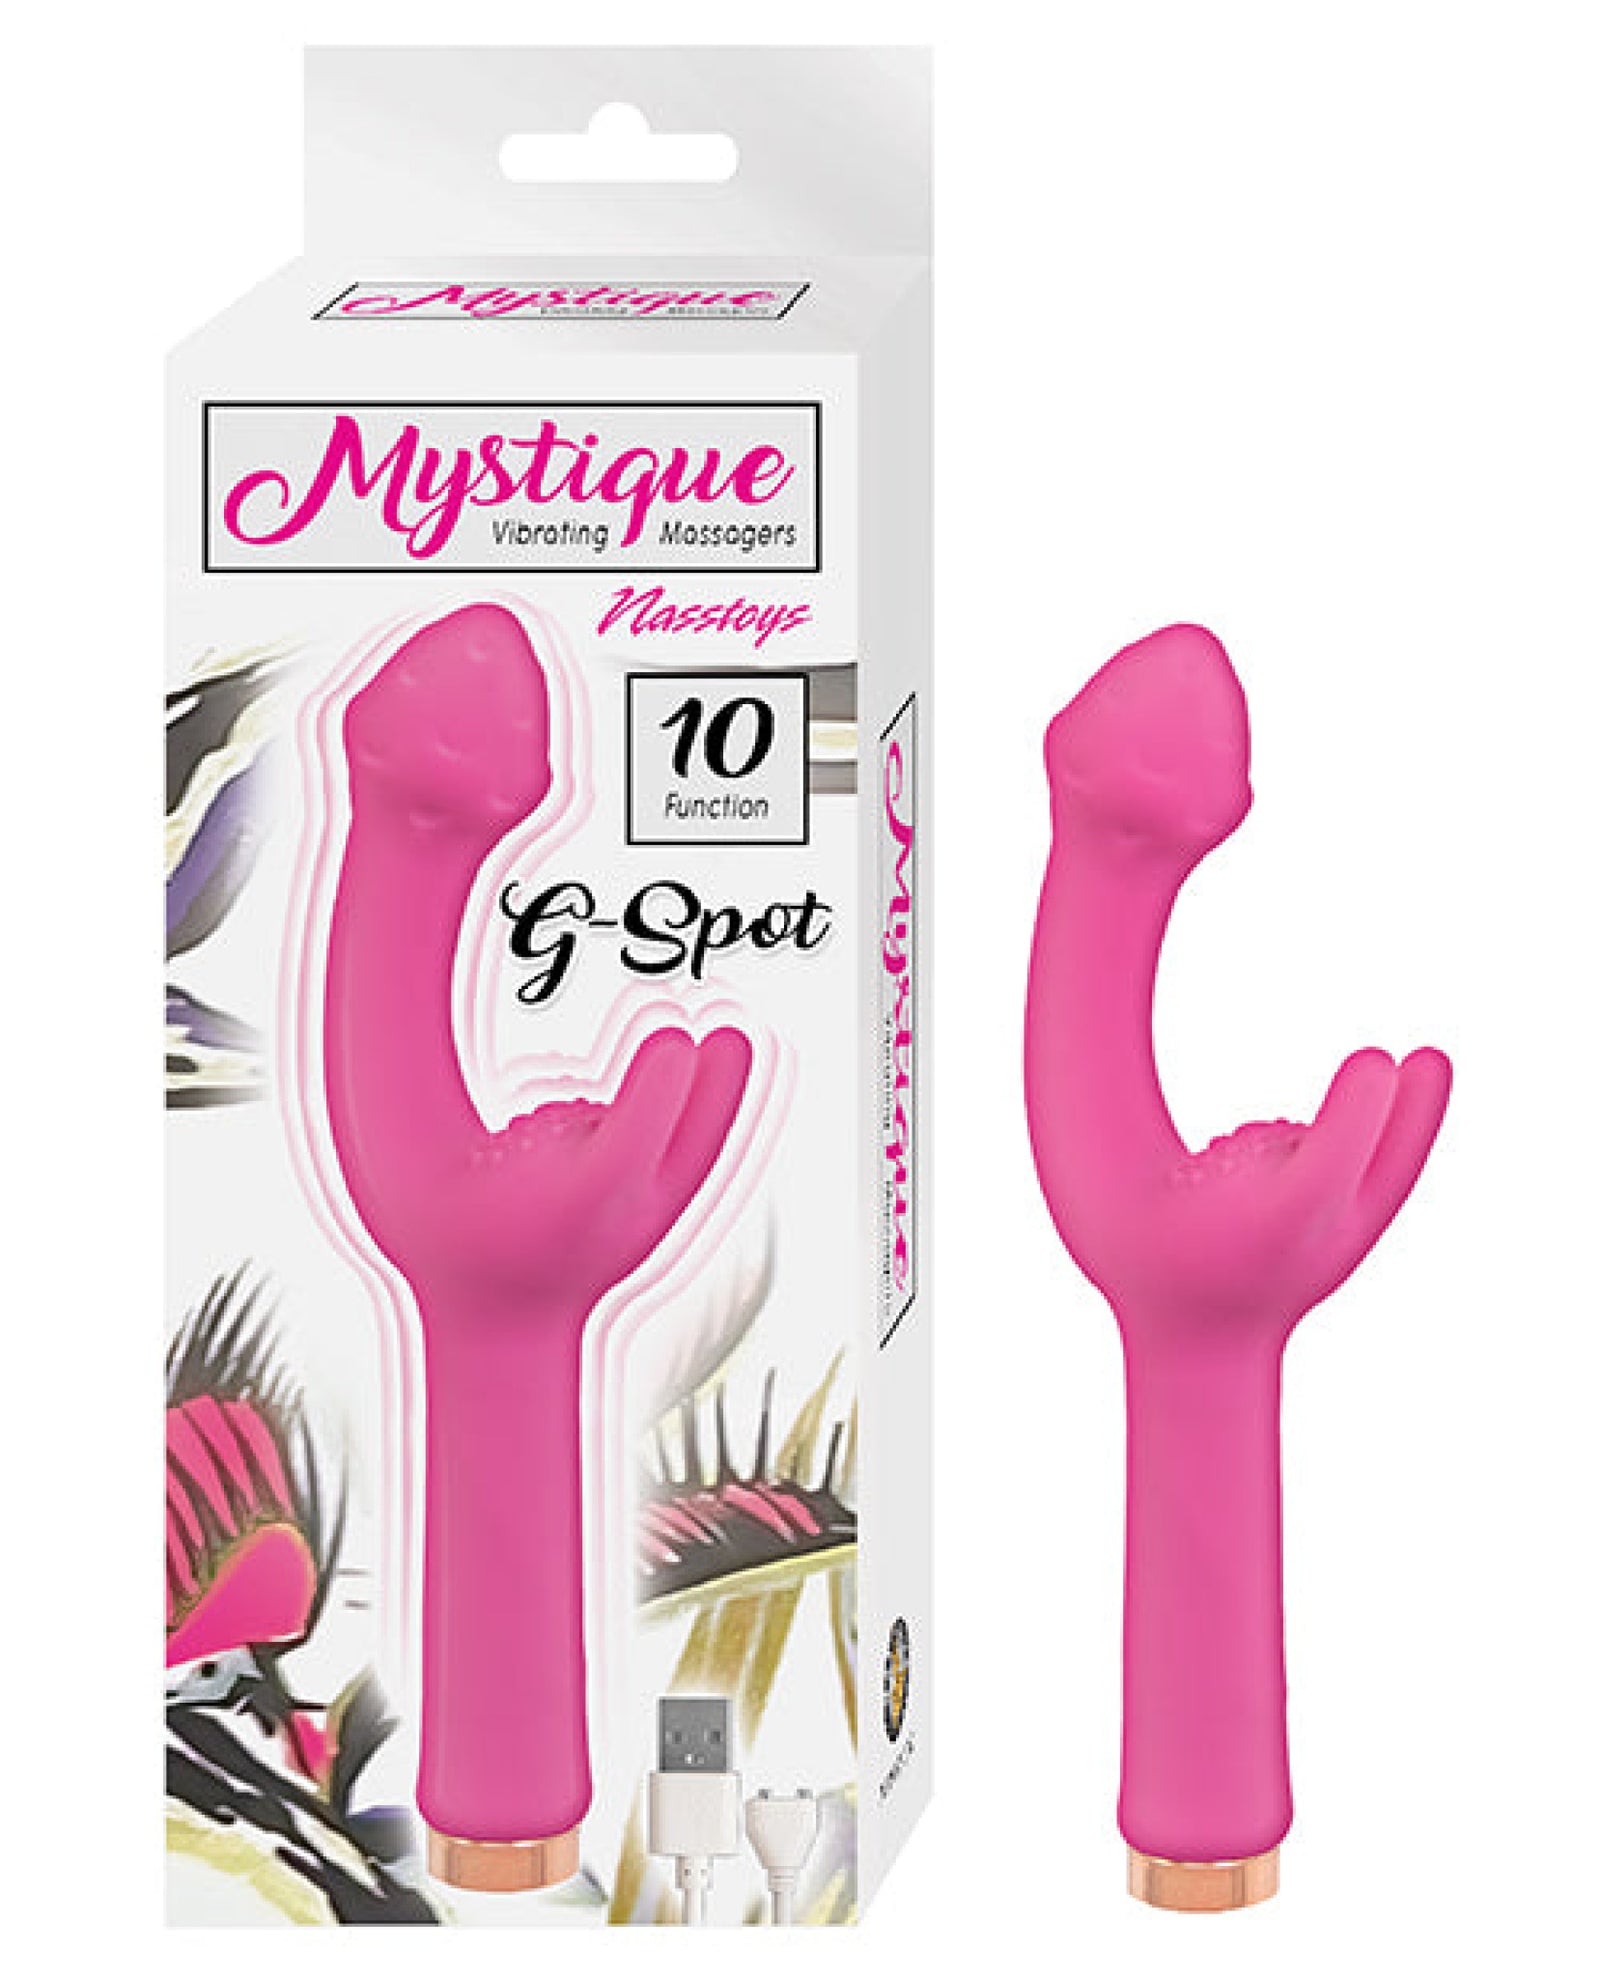 Mystique Vibrating G Spot Massager Nasstoys